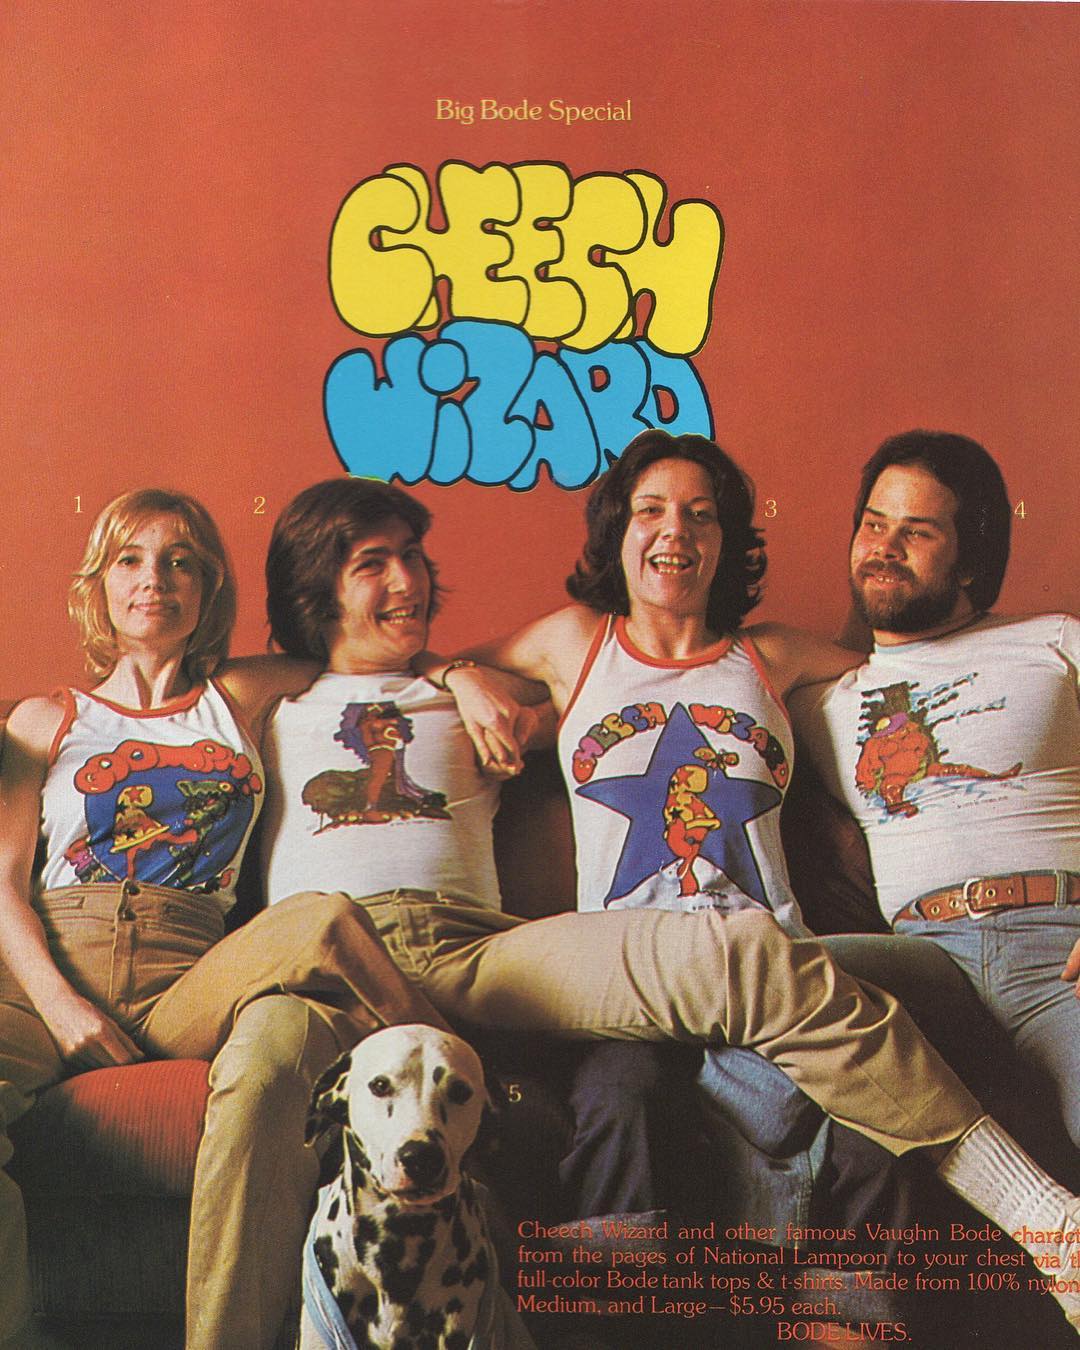 Cheech Wizard shirts, 1976